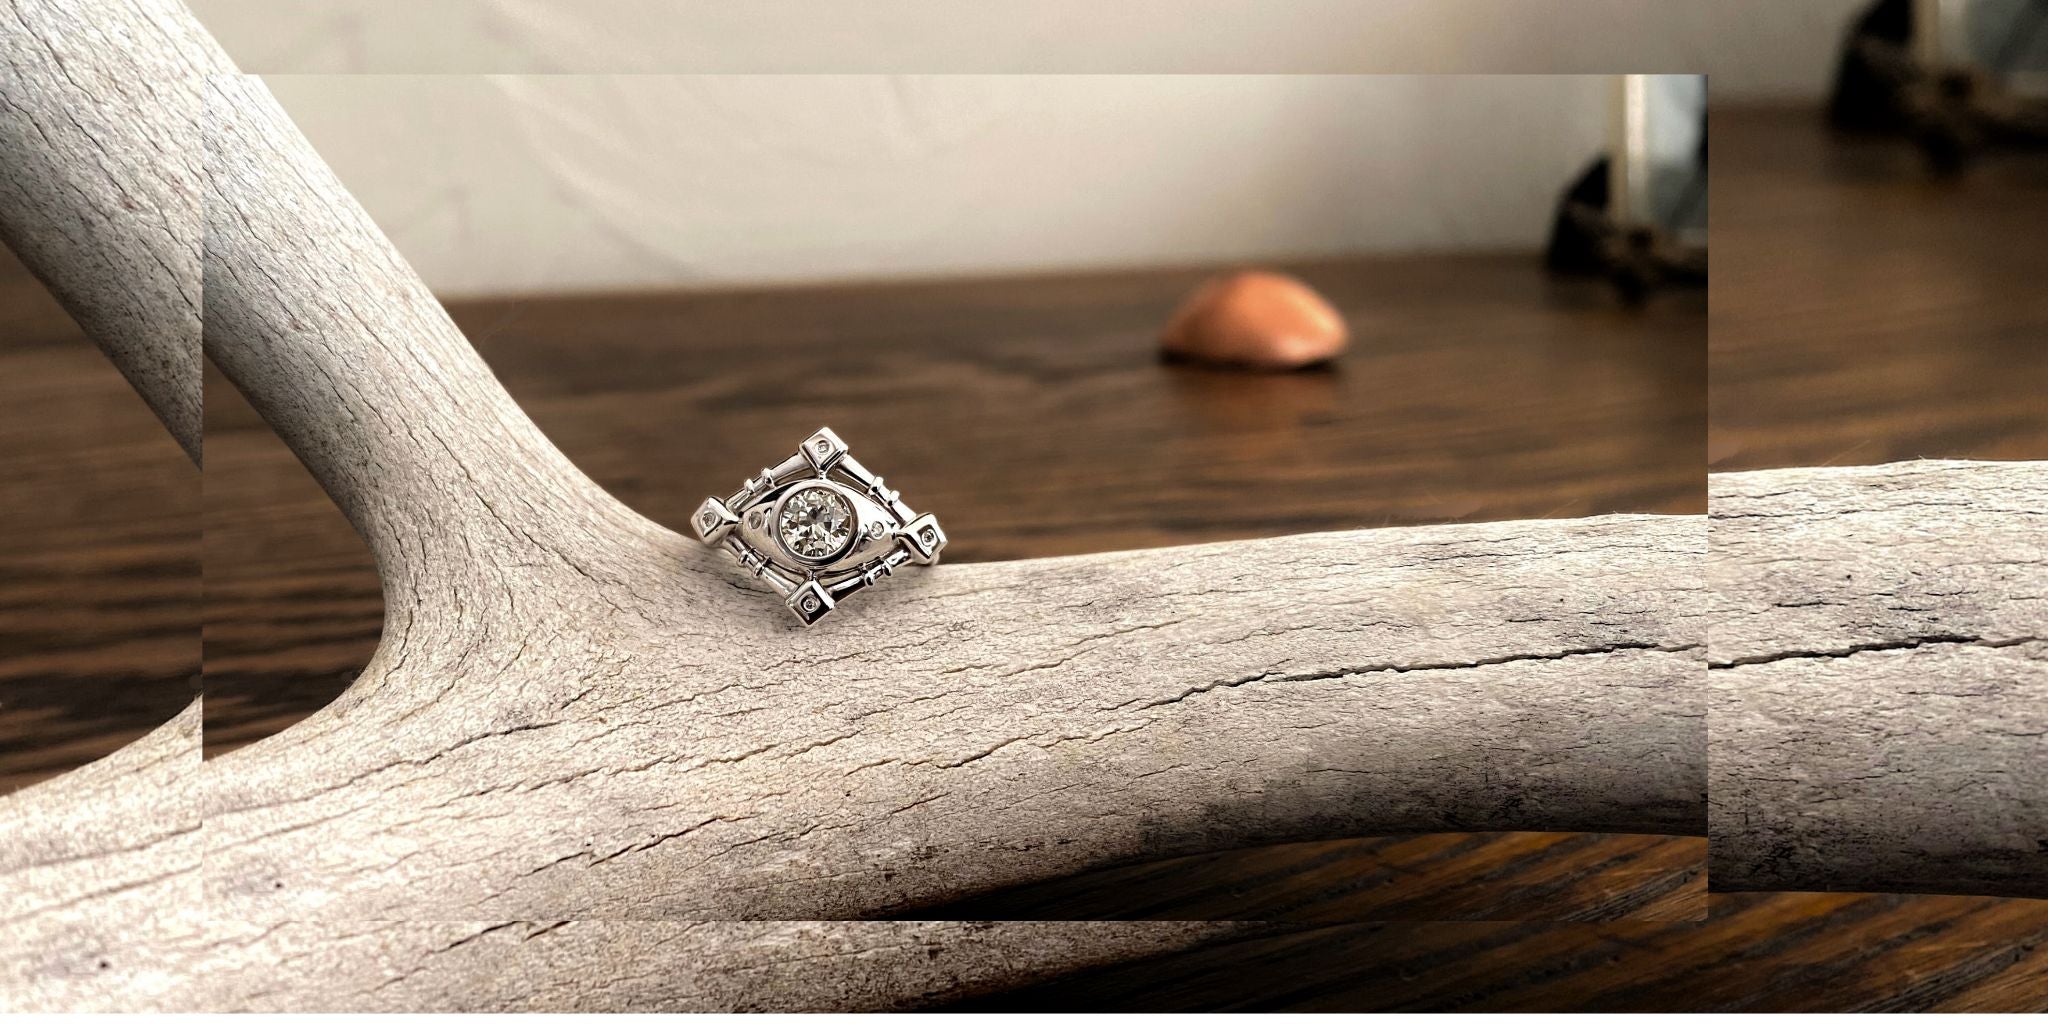 A beautiful bespoke ring design.